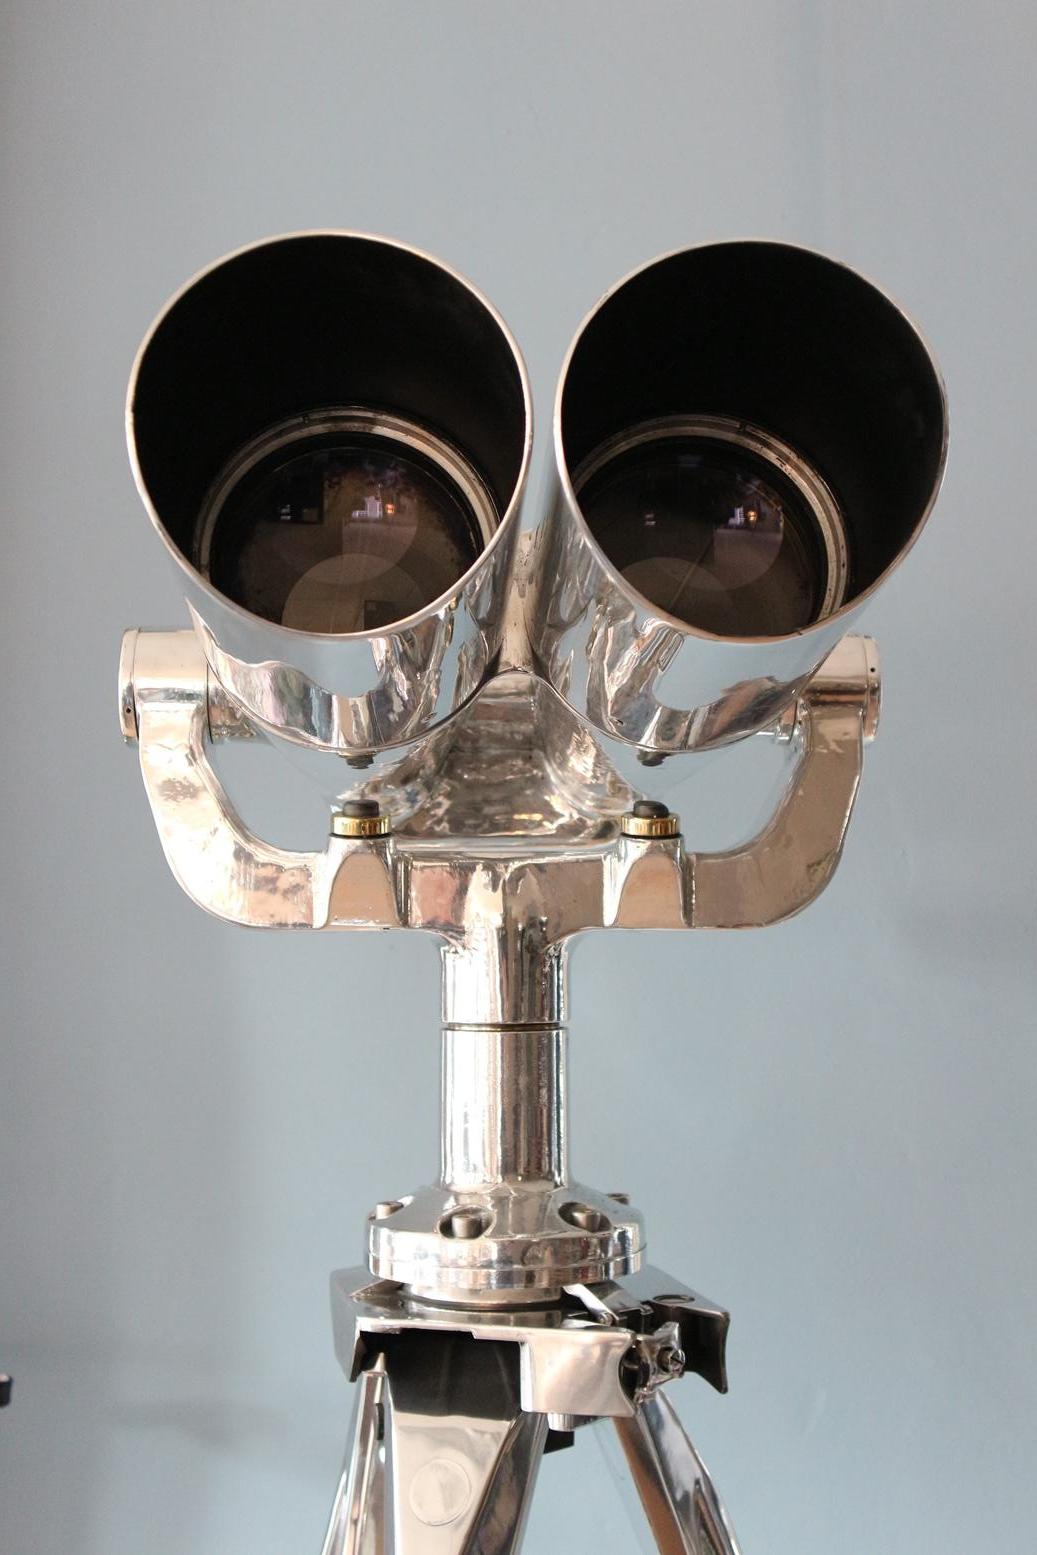 kowa binoculars for sale